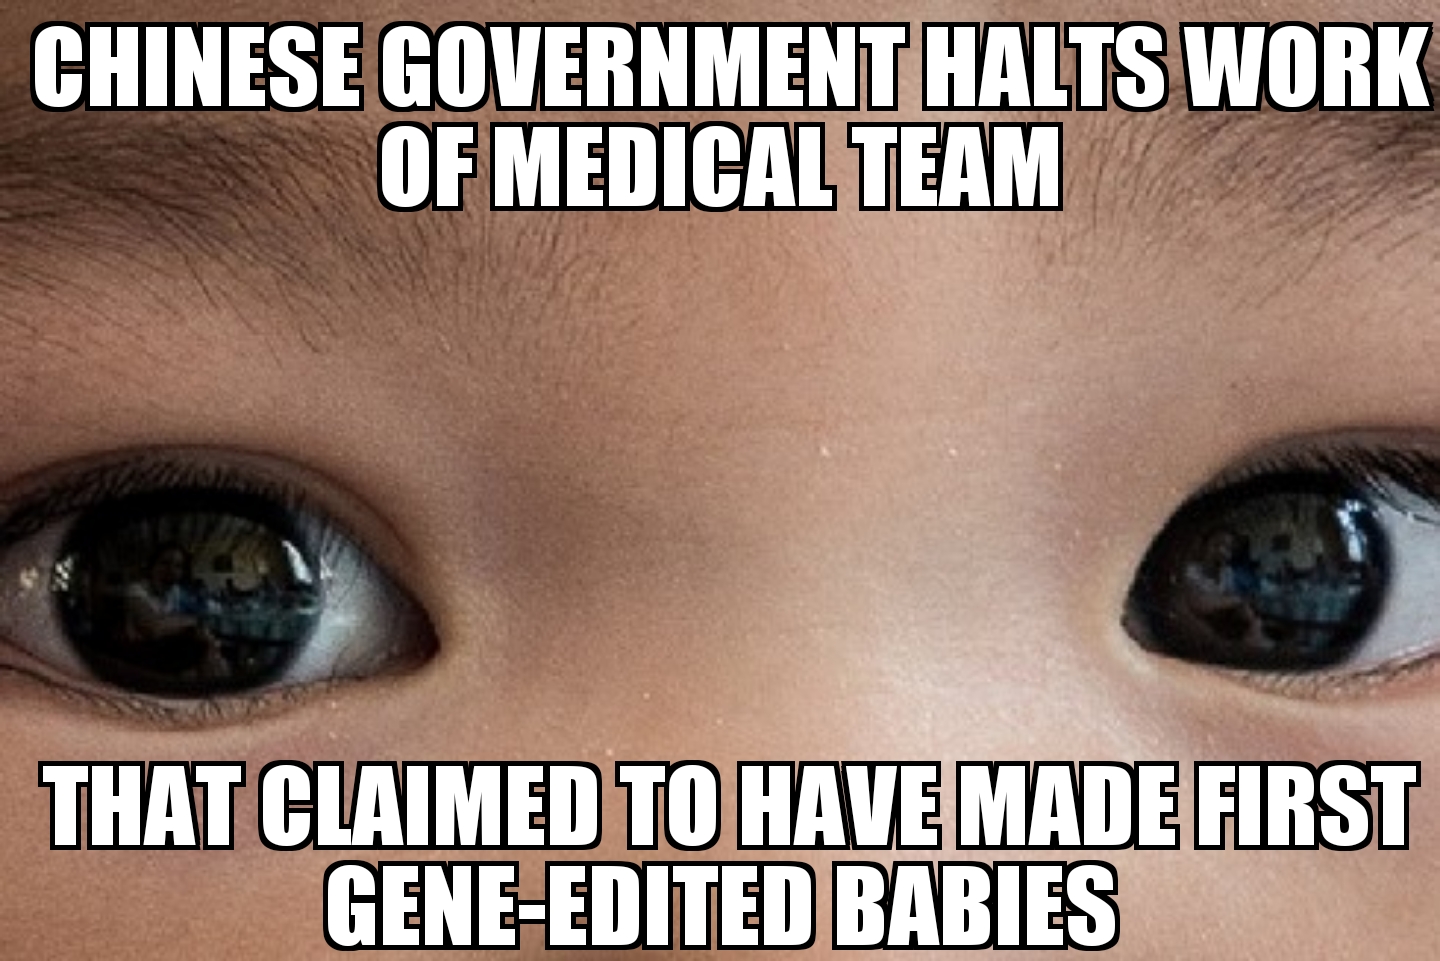 China halts baby gene-editing